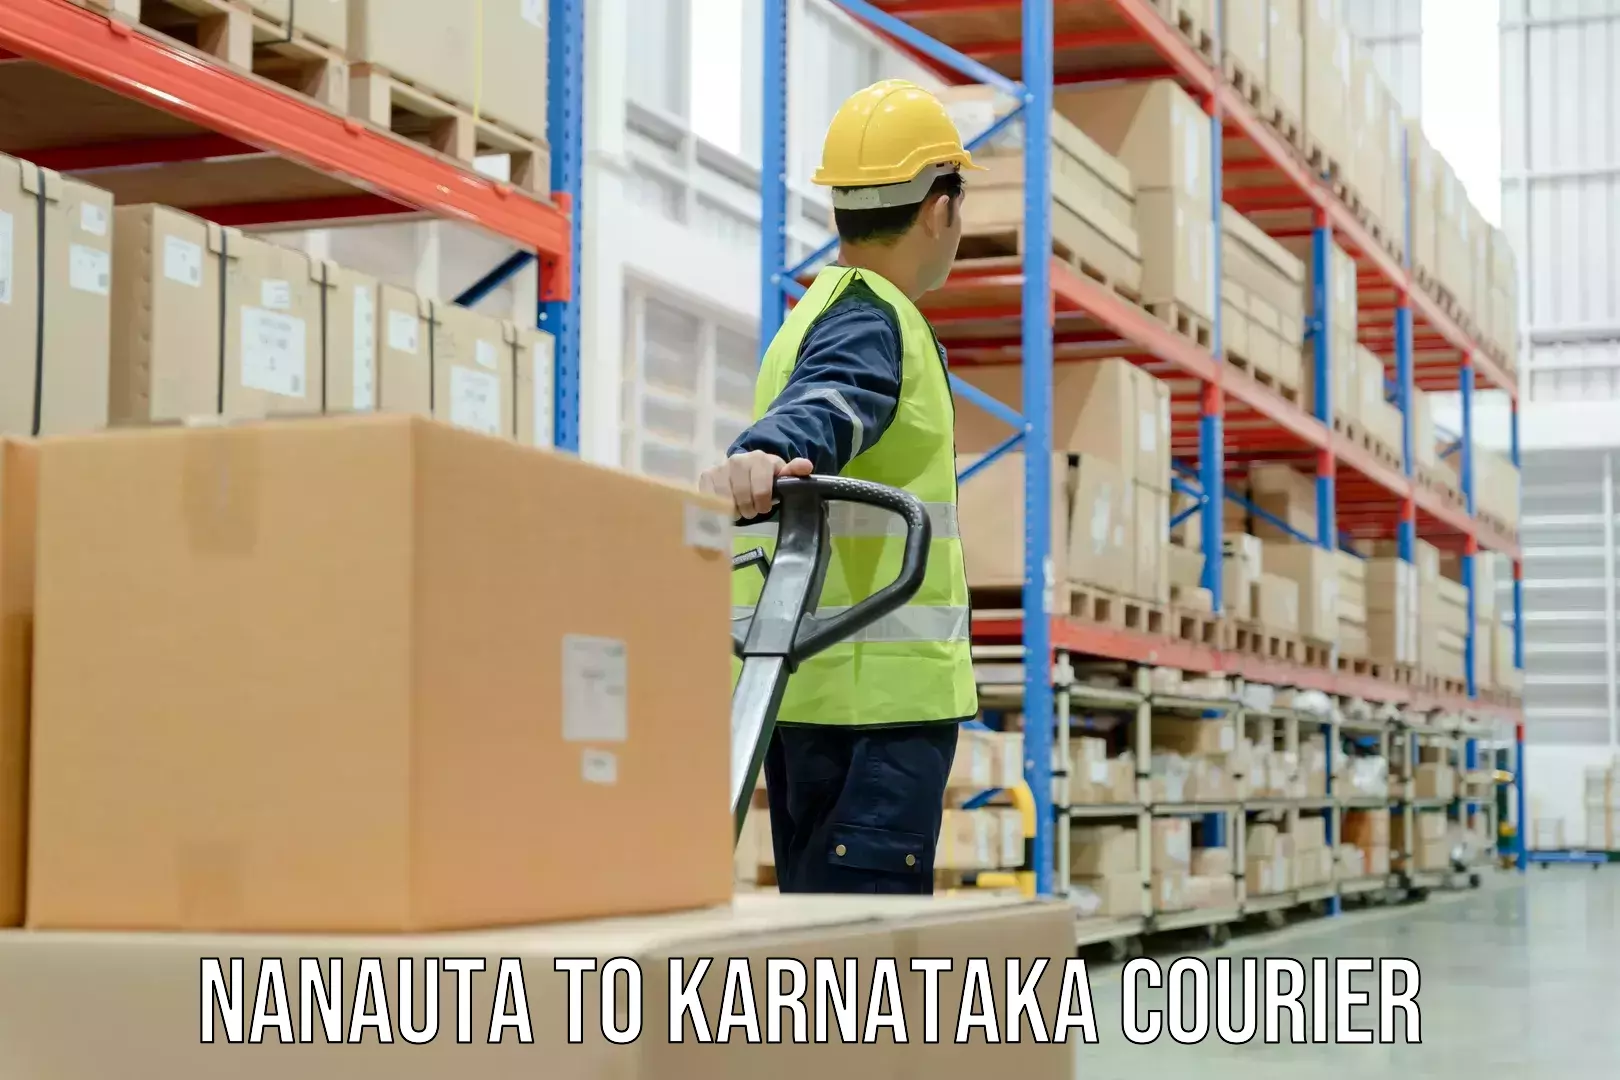 Reliable courier service Nanauta to Karnataka